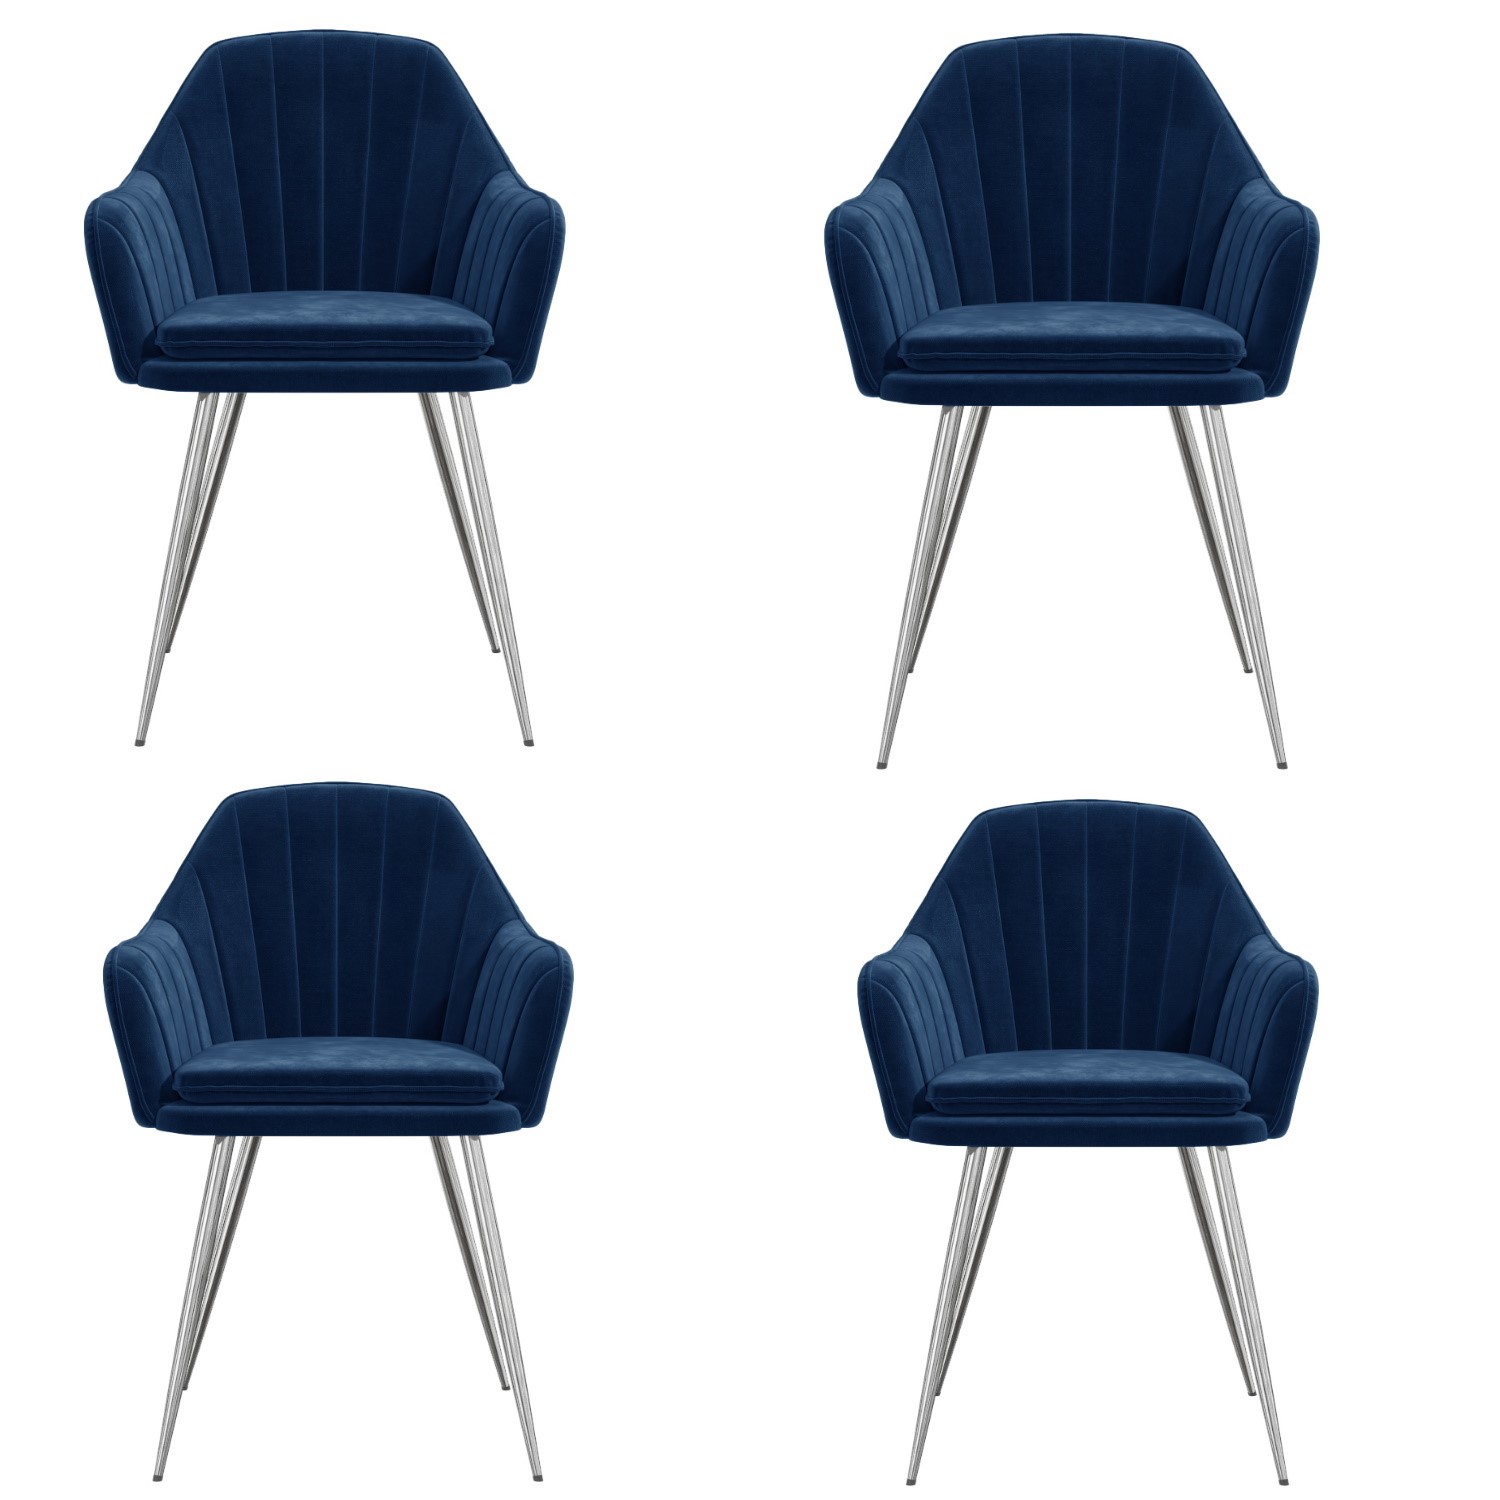 Set Of 4 Navy Blue Velvet Dining Tub, Dark Blue Dining Chairs With Chrome Legs